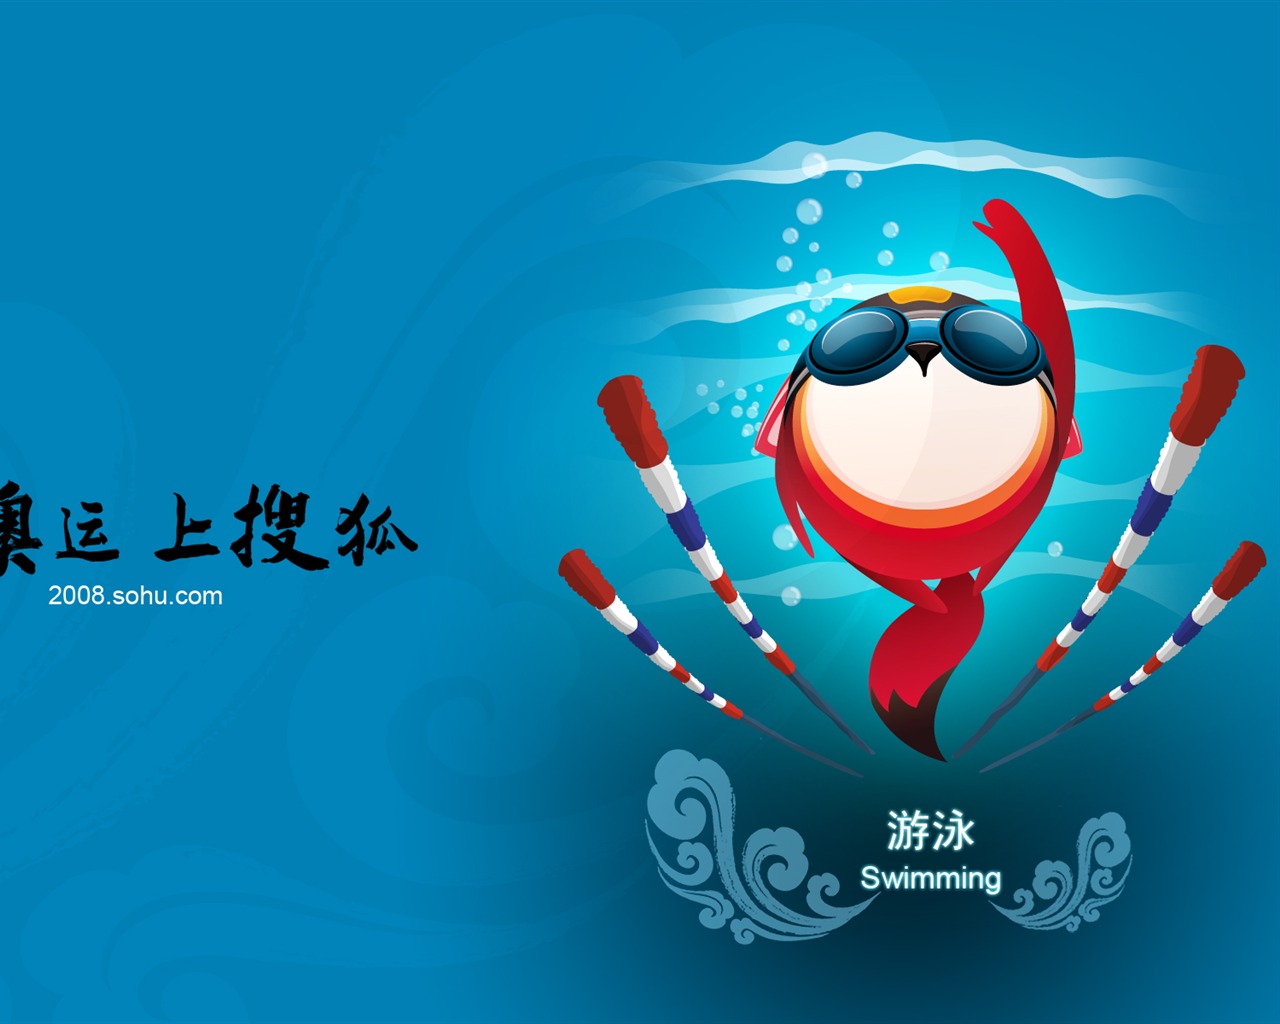 Sohu Olympic sports style wallpaper #26 - 1280x1024